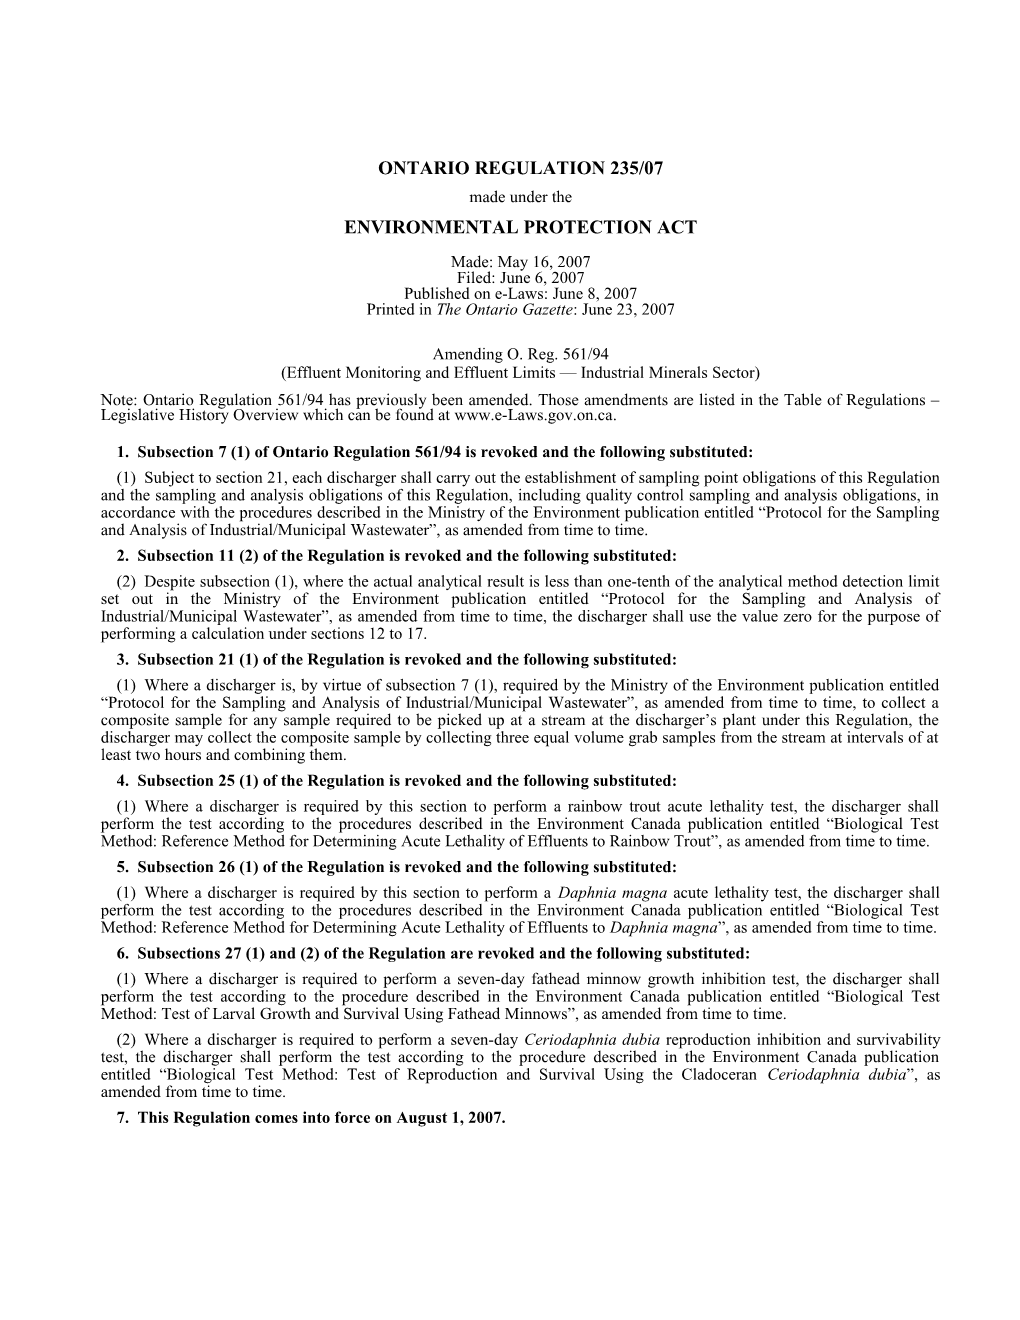 ENVIRONMENTAL PROTECTION ACT - O. Reg. 235/07